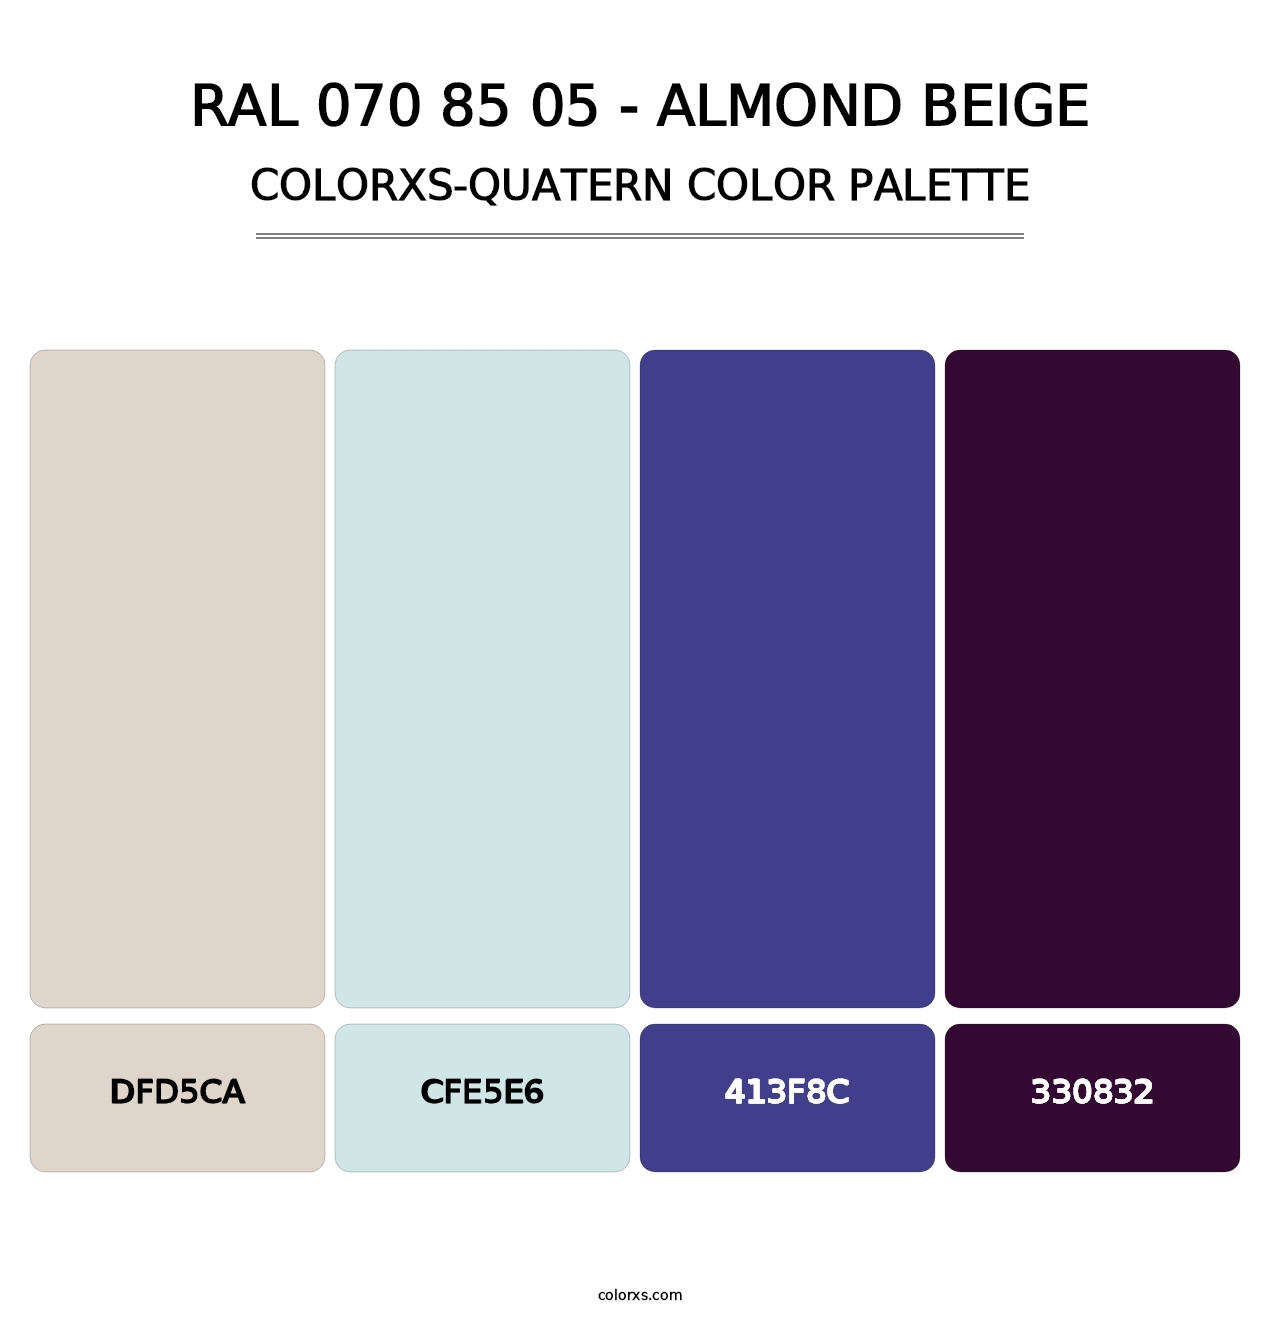 RAL 070 85 05 - Almond Beige - Colorxs Quatern Palette